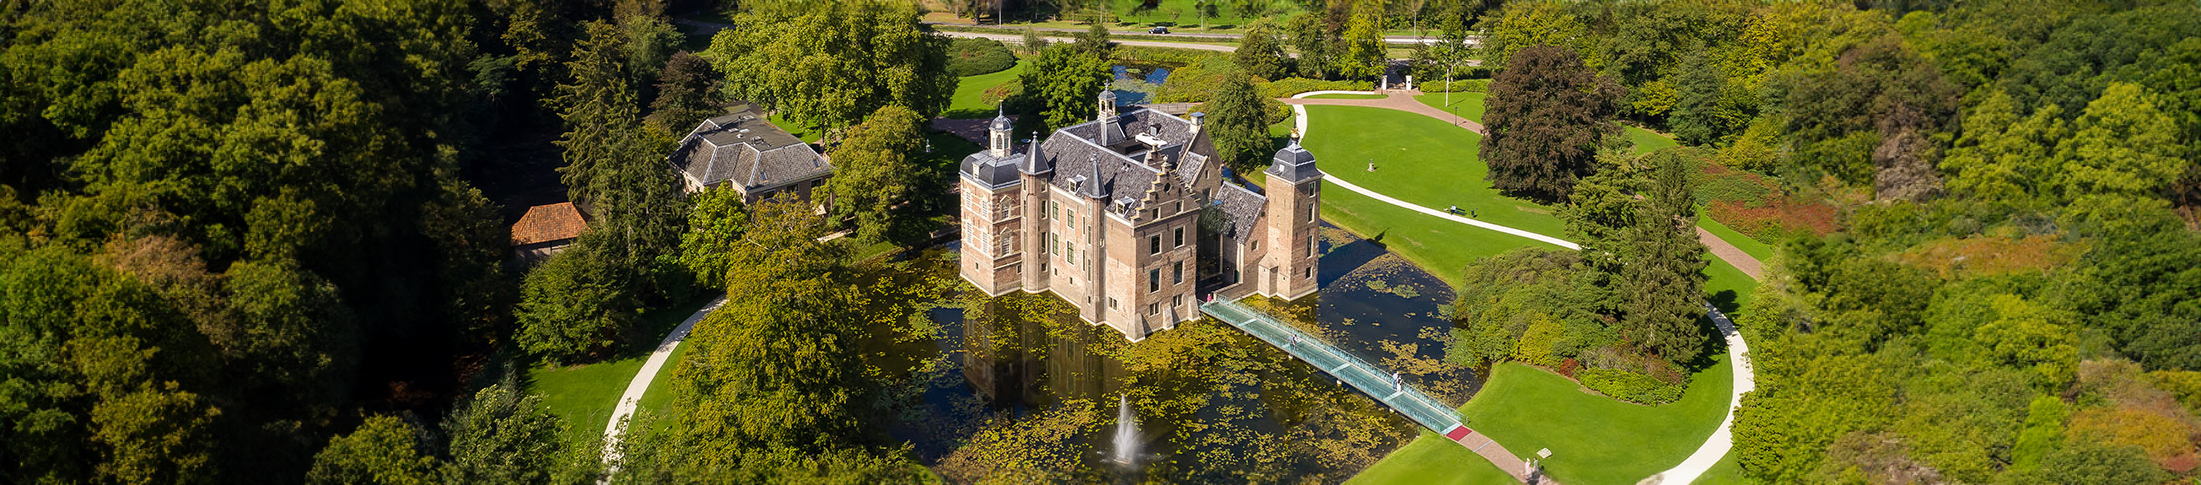 wonders of luxury castle holland luxury 